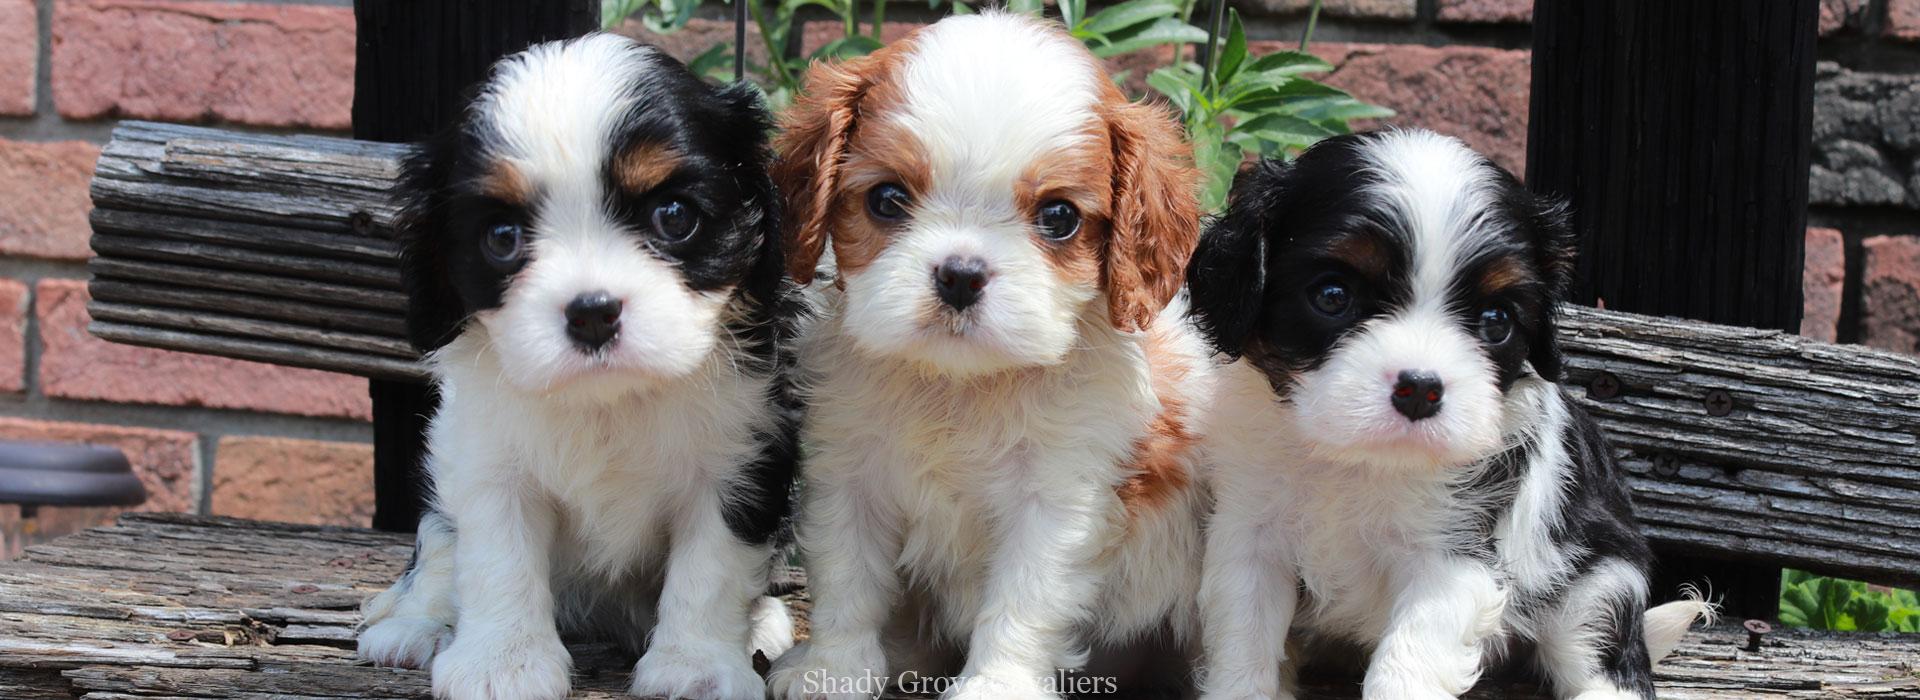 filter draaipunt verlangen Cavalier King Charles Spaniel Puppies from Shady Grove Cavaliers